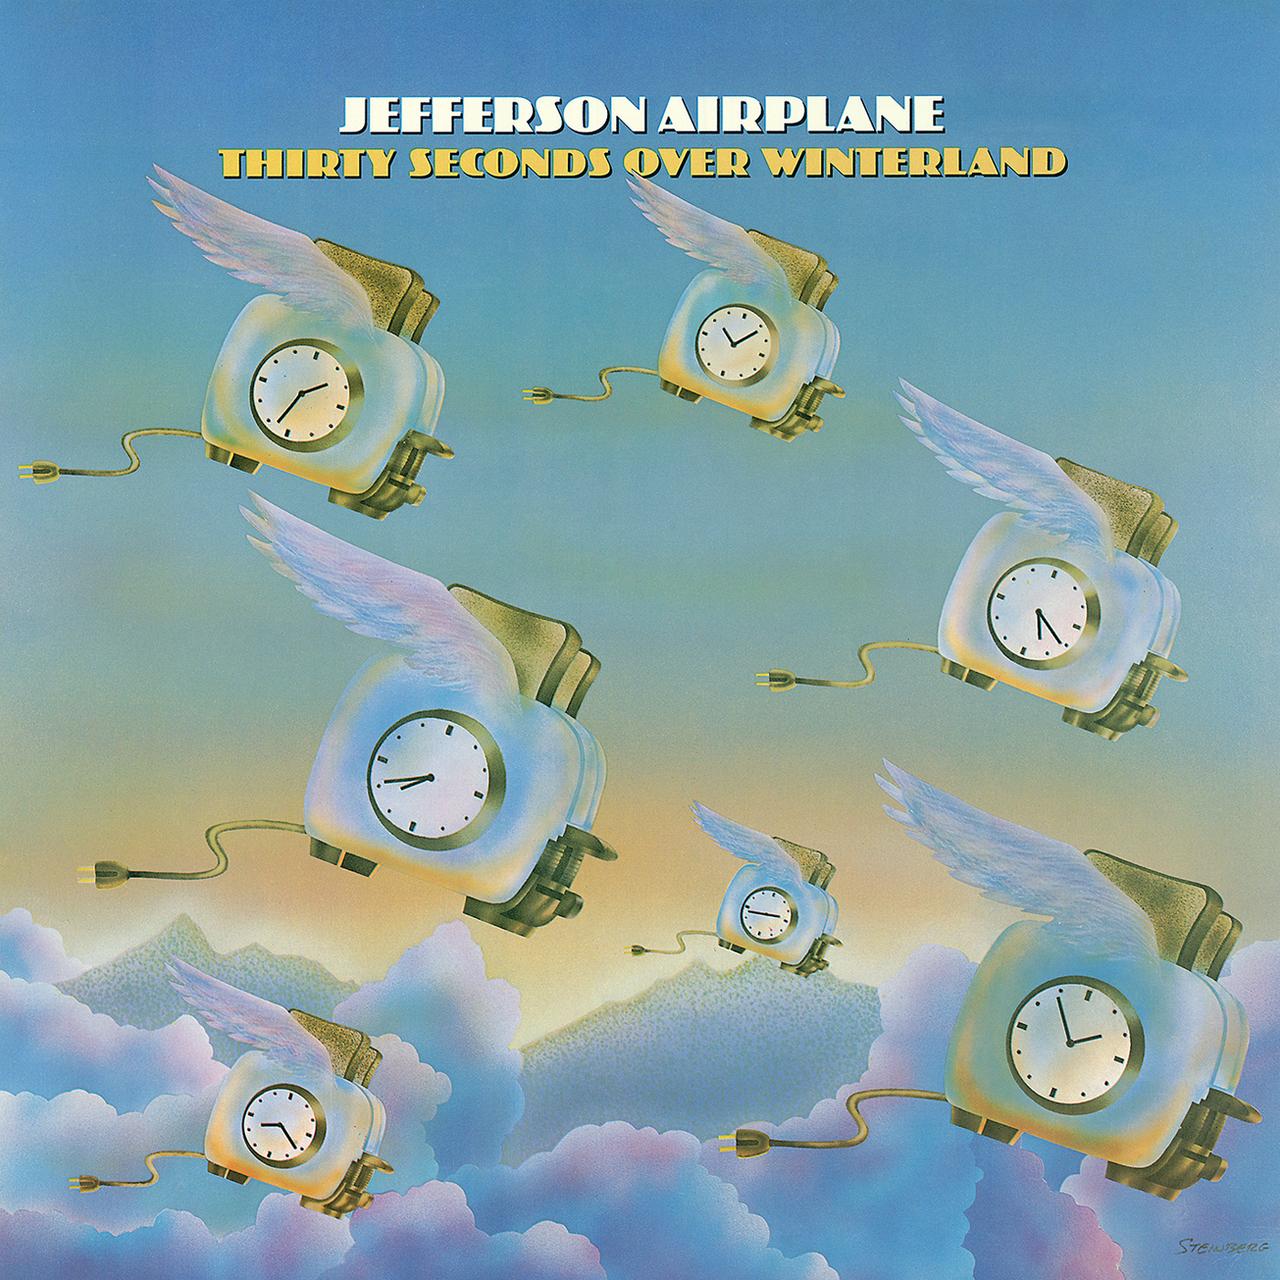 JEFFERSON AIRPLANE - Thirty Seconds Over Winterland (180g)